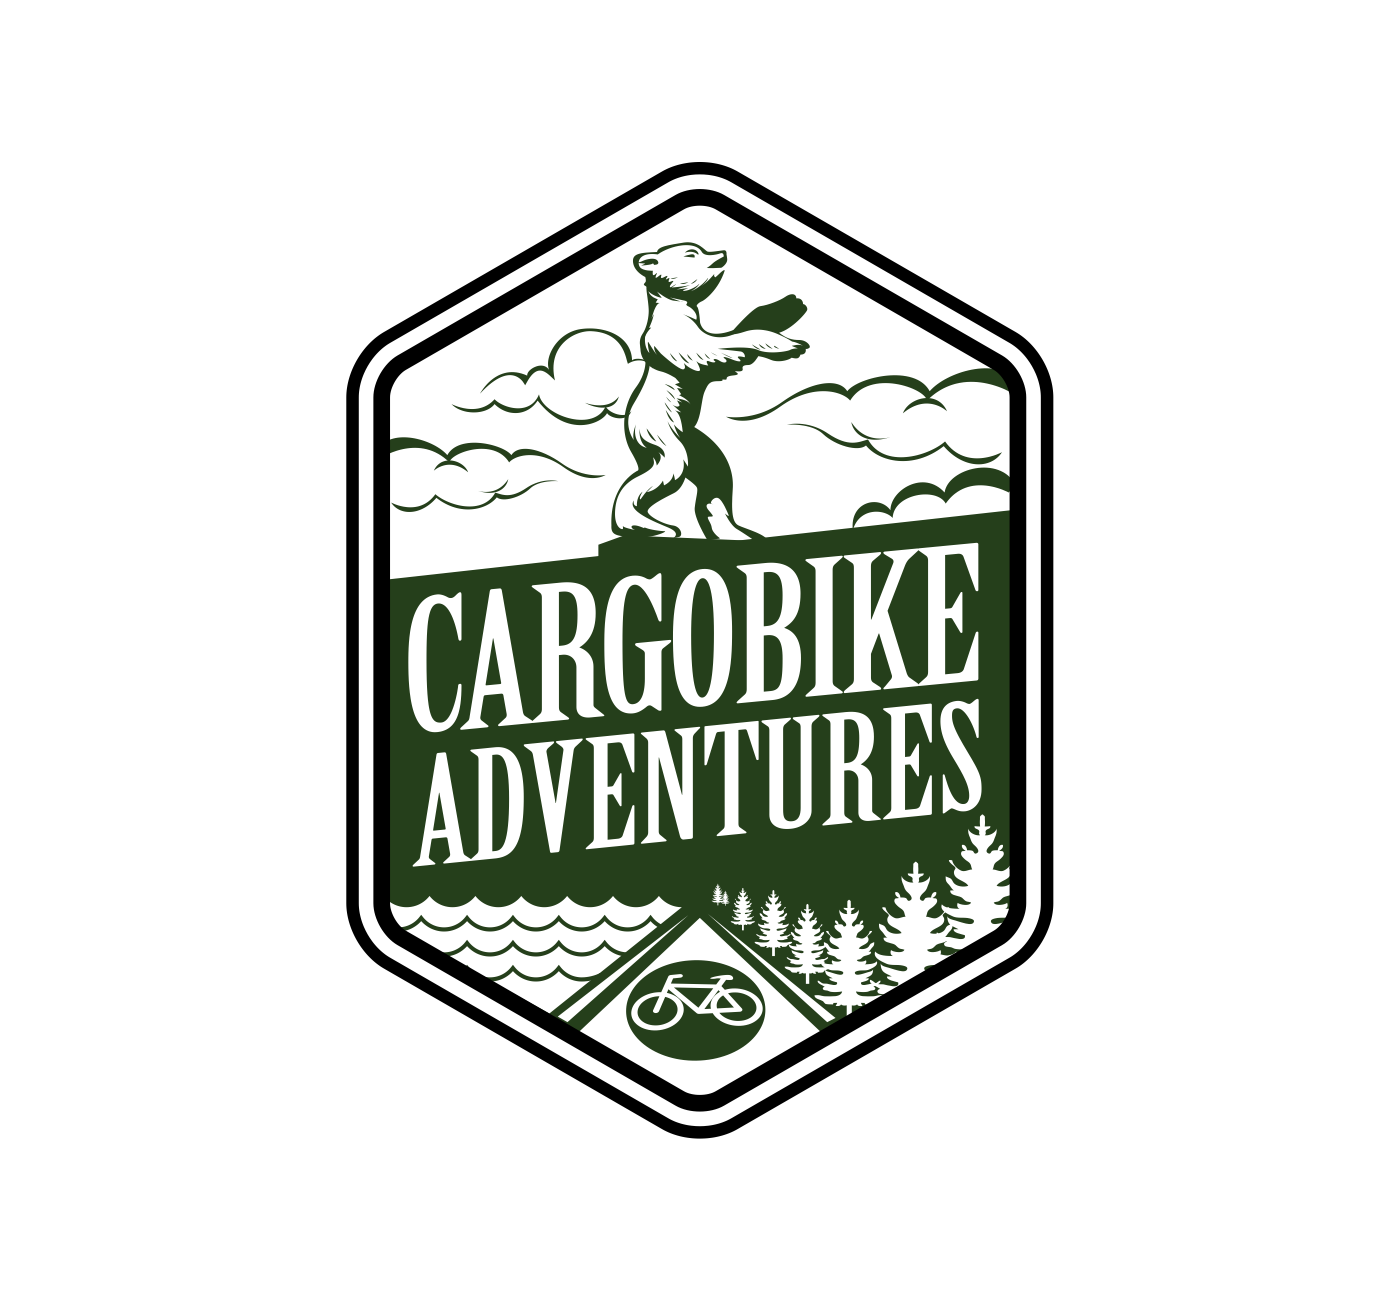 Cargobike Adventures